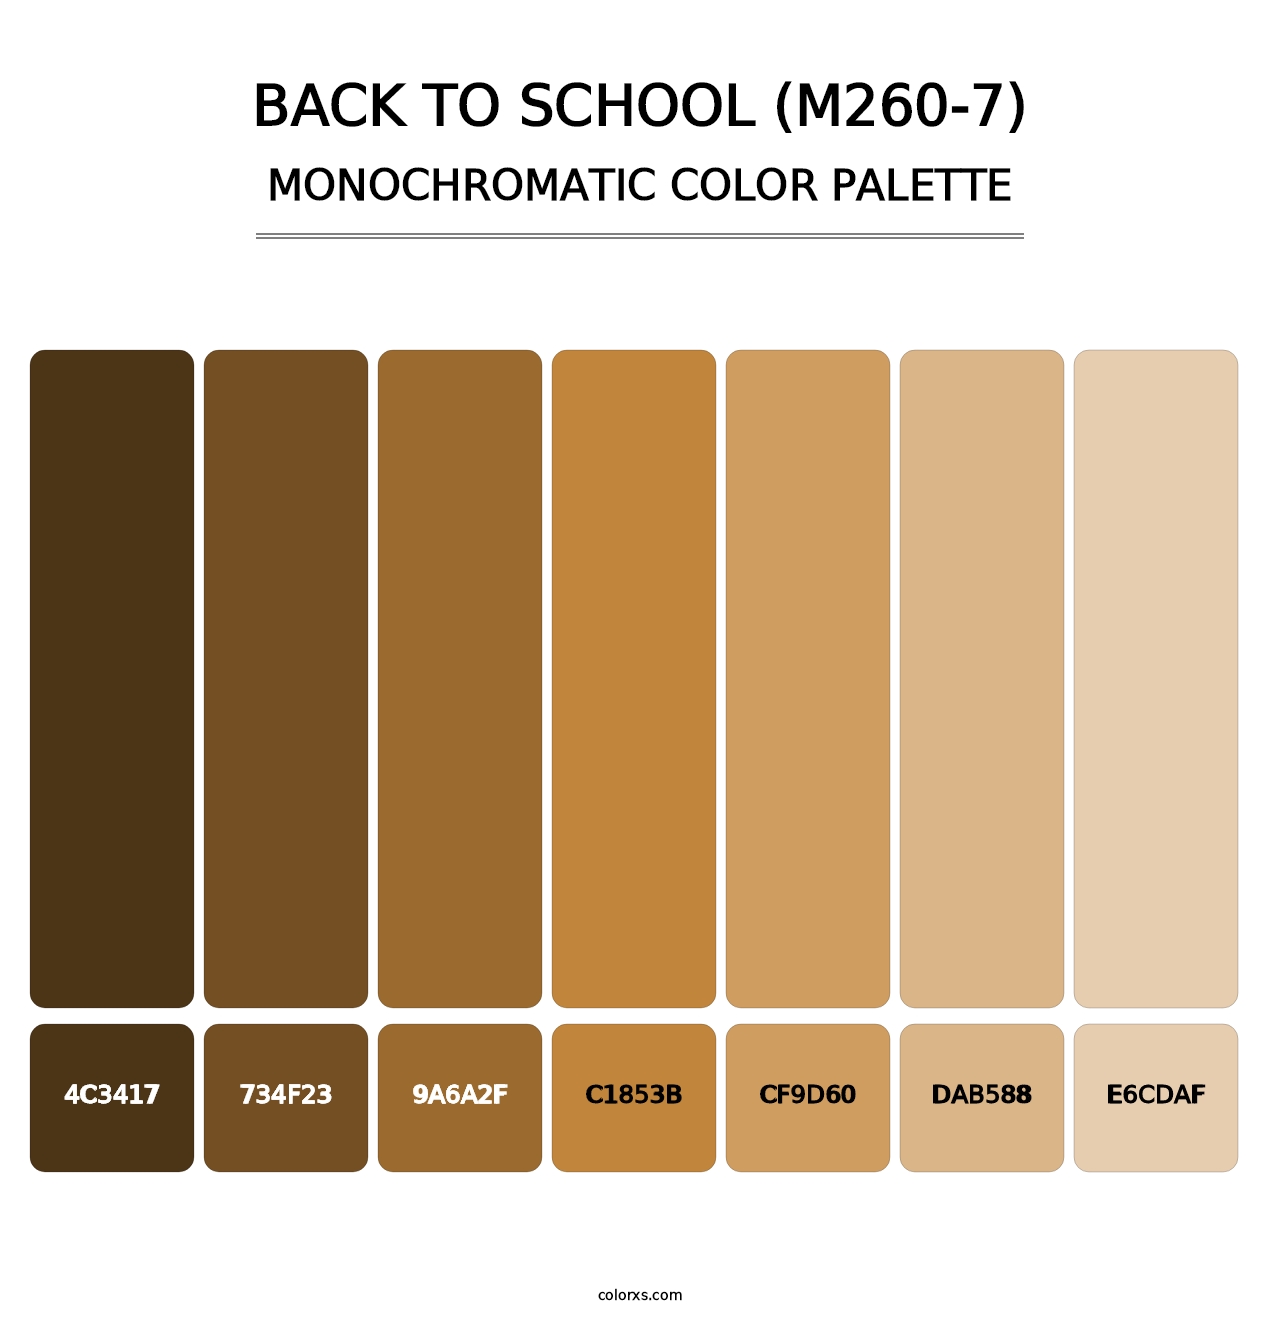 Back To School (M260-7) - Monochromatic Color Palette